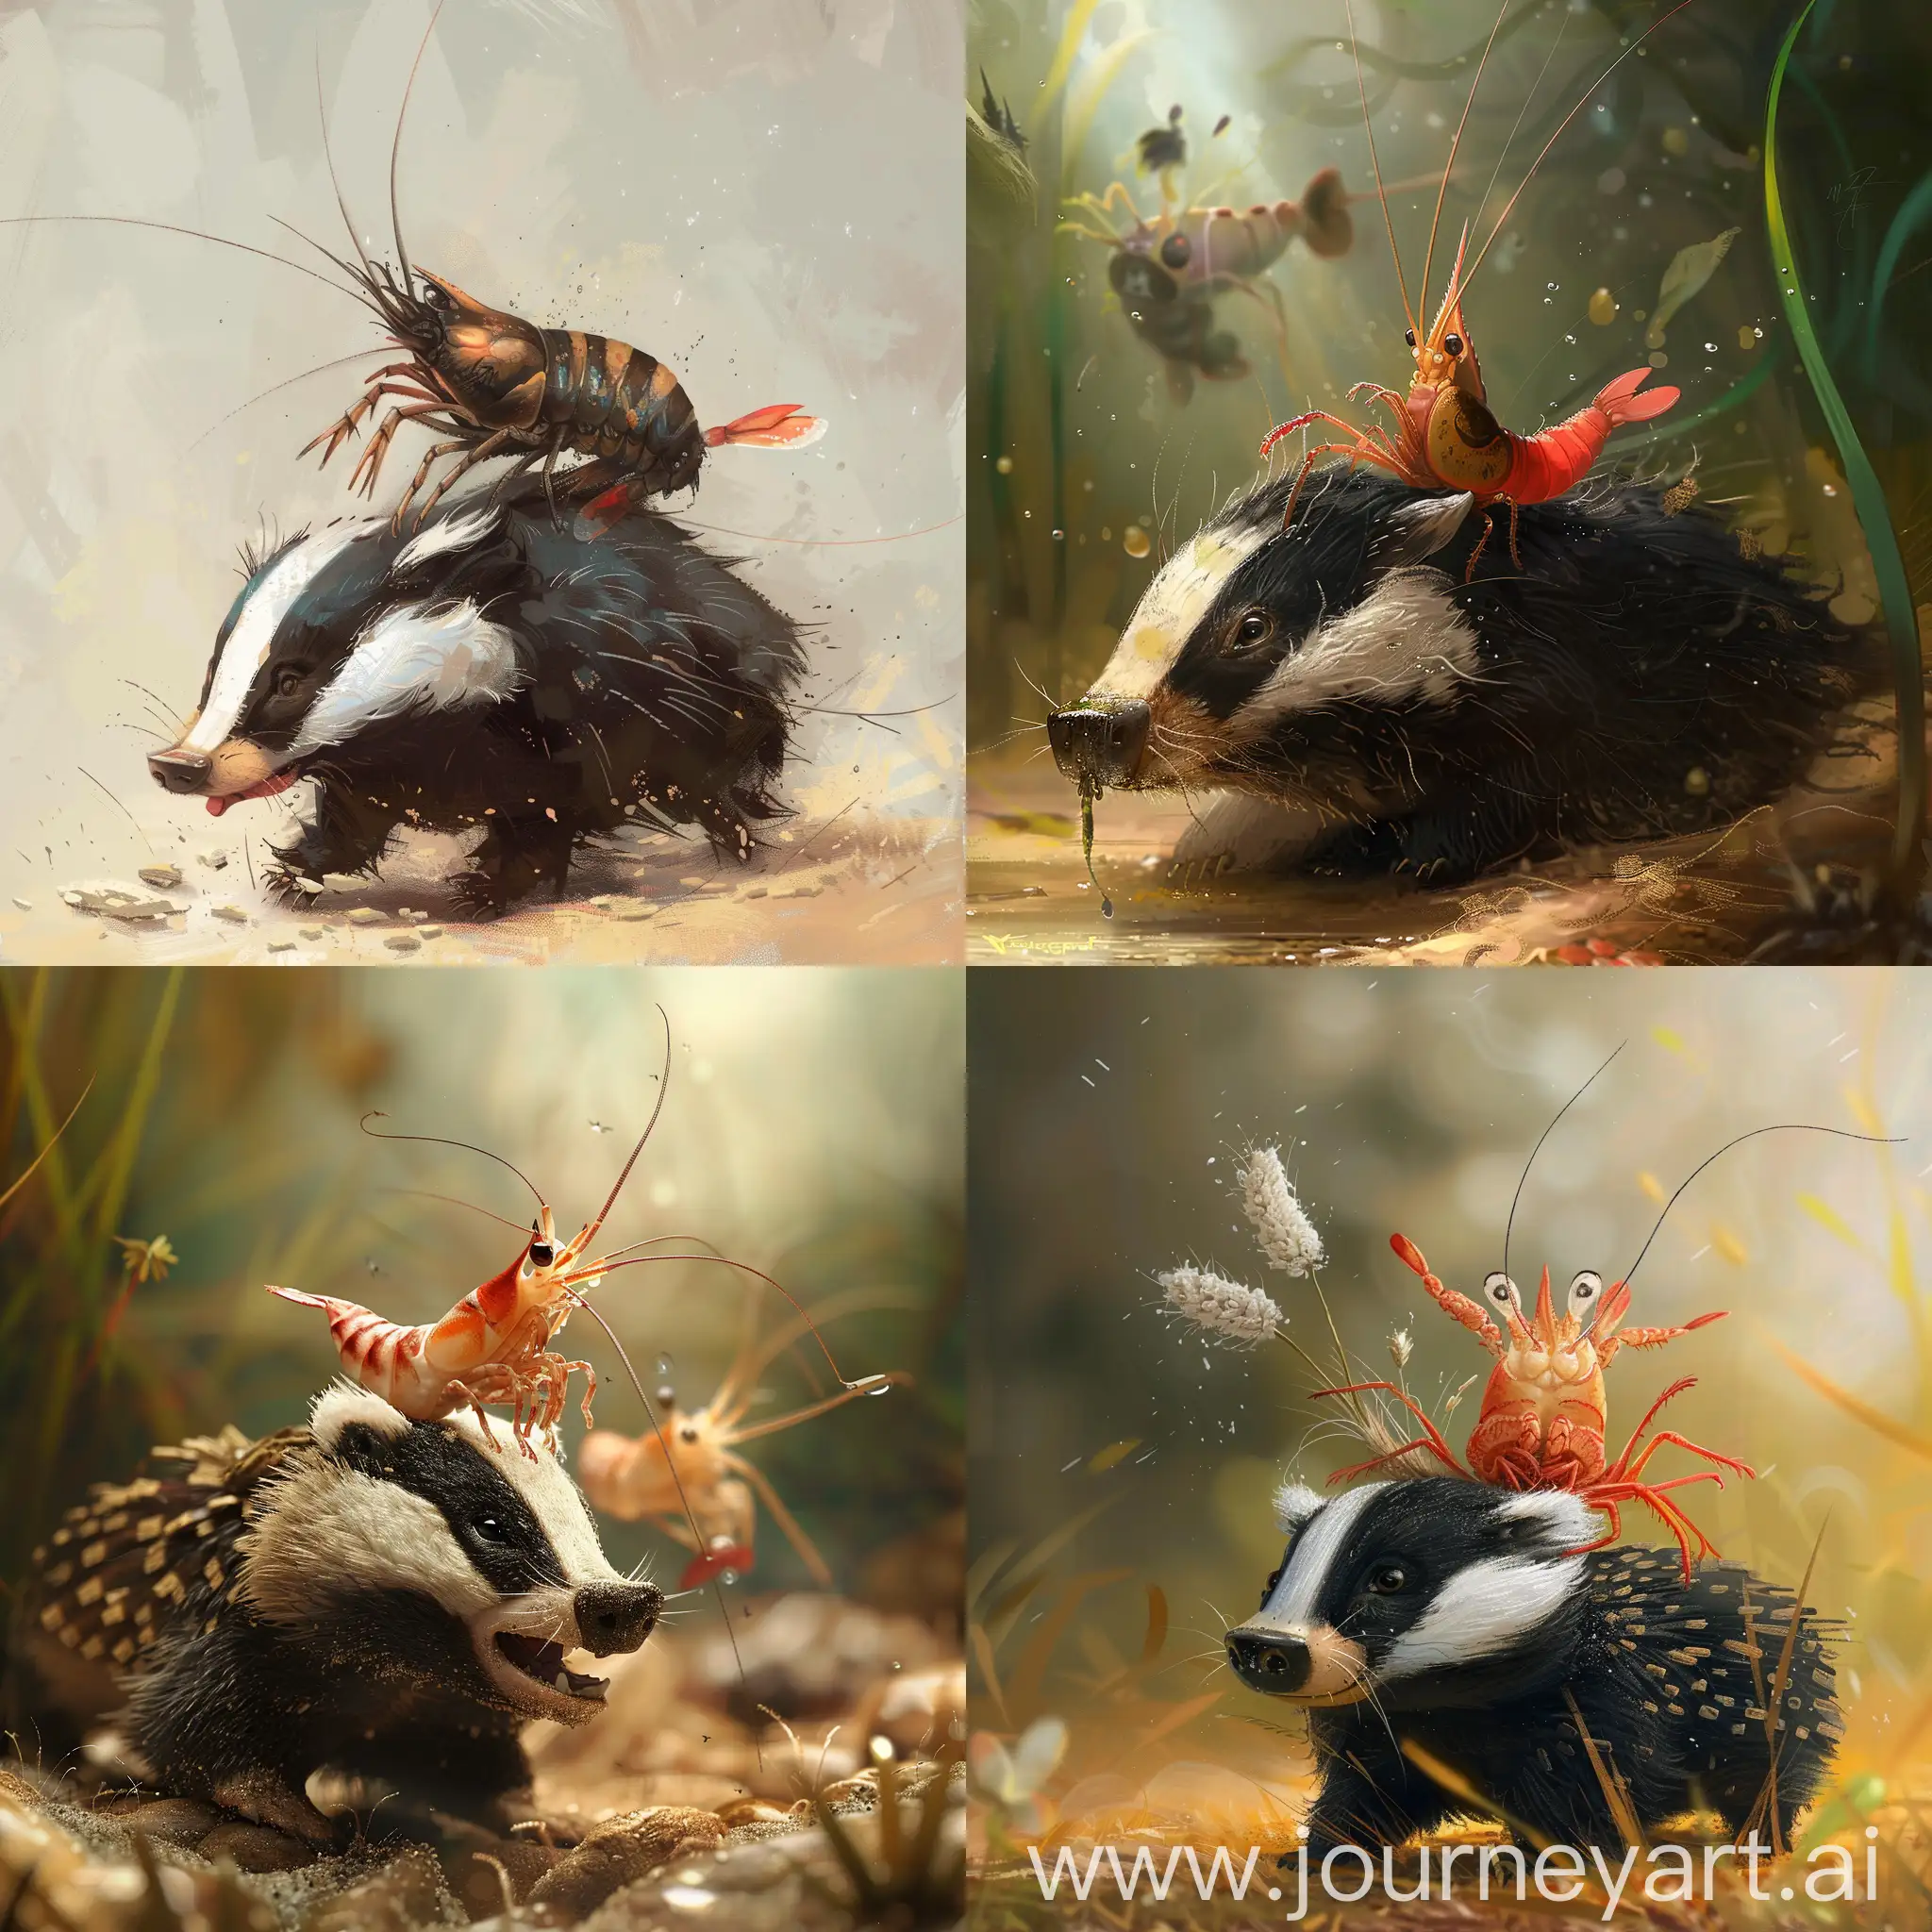 Playful-Shrimp-Riding-on-Majestic-Badger